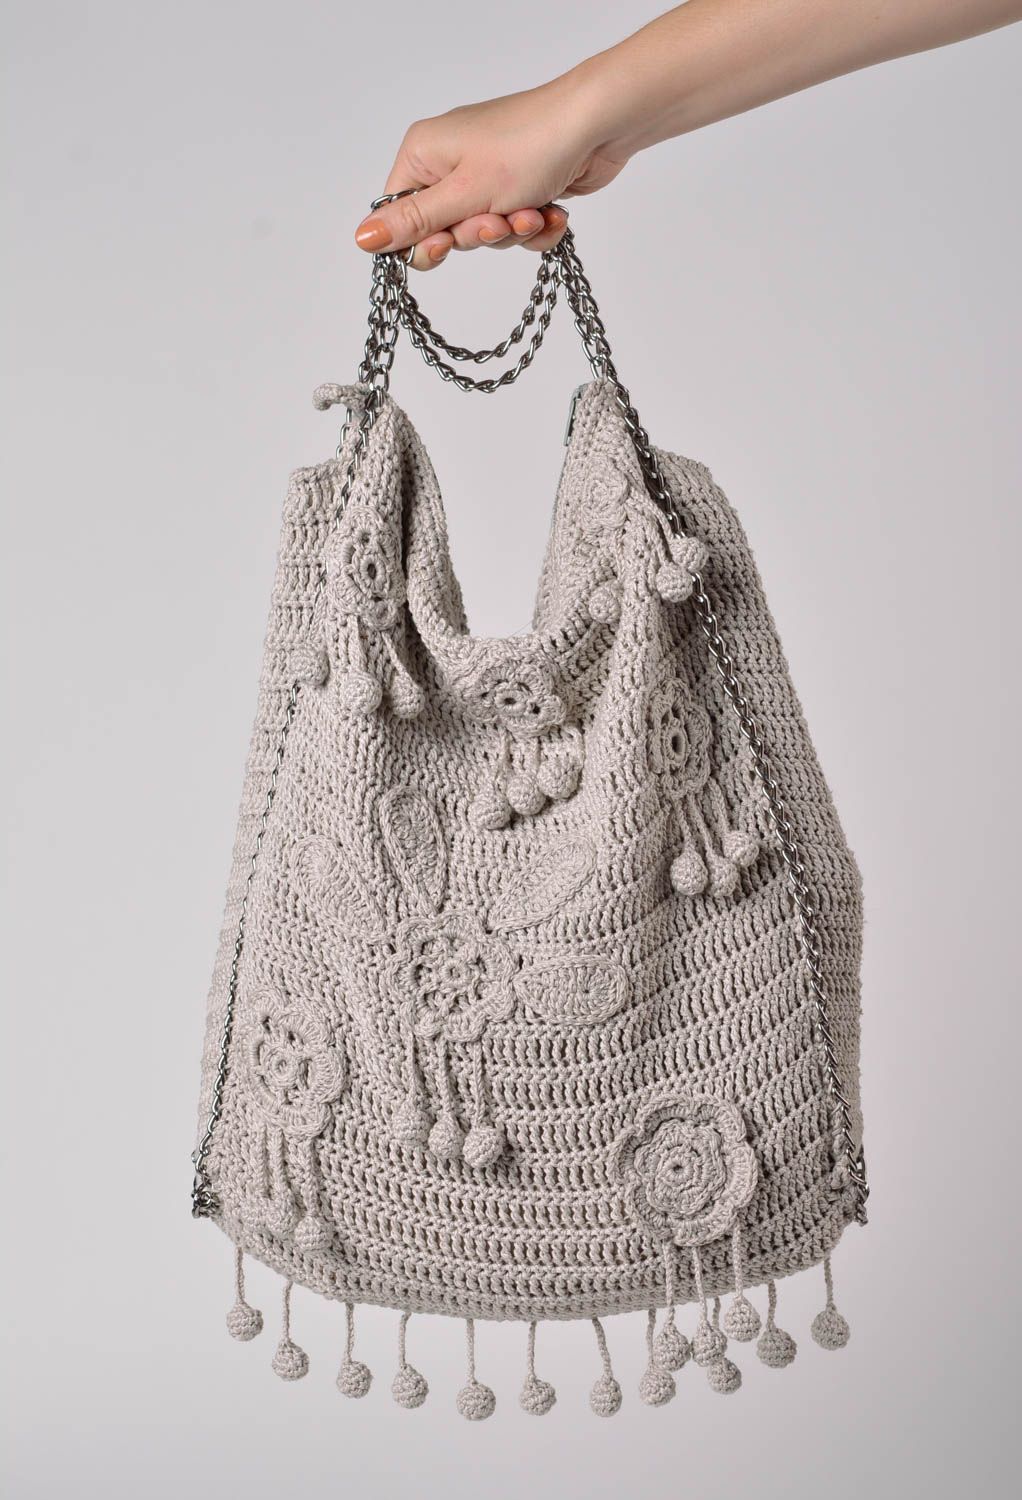 Crocheted purse made of cotton yarns handmade gray stylish handbag for women photo 2